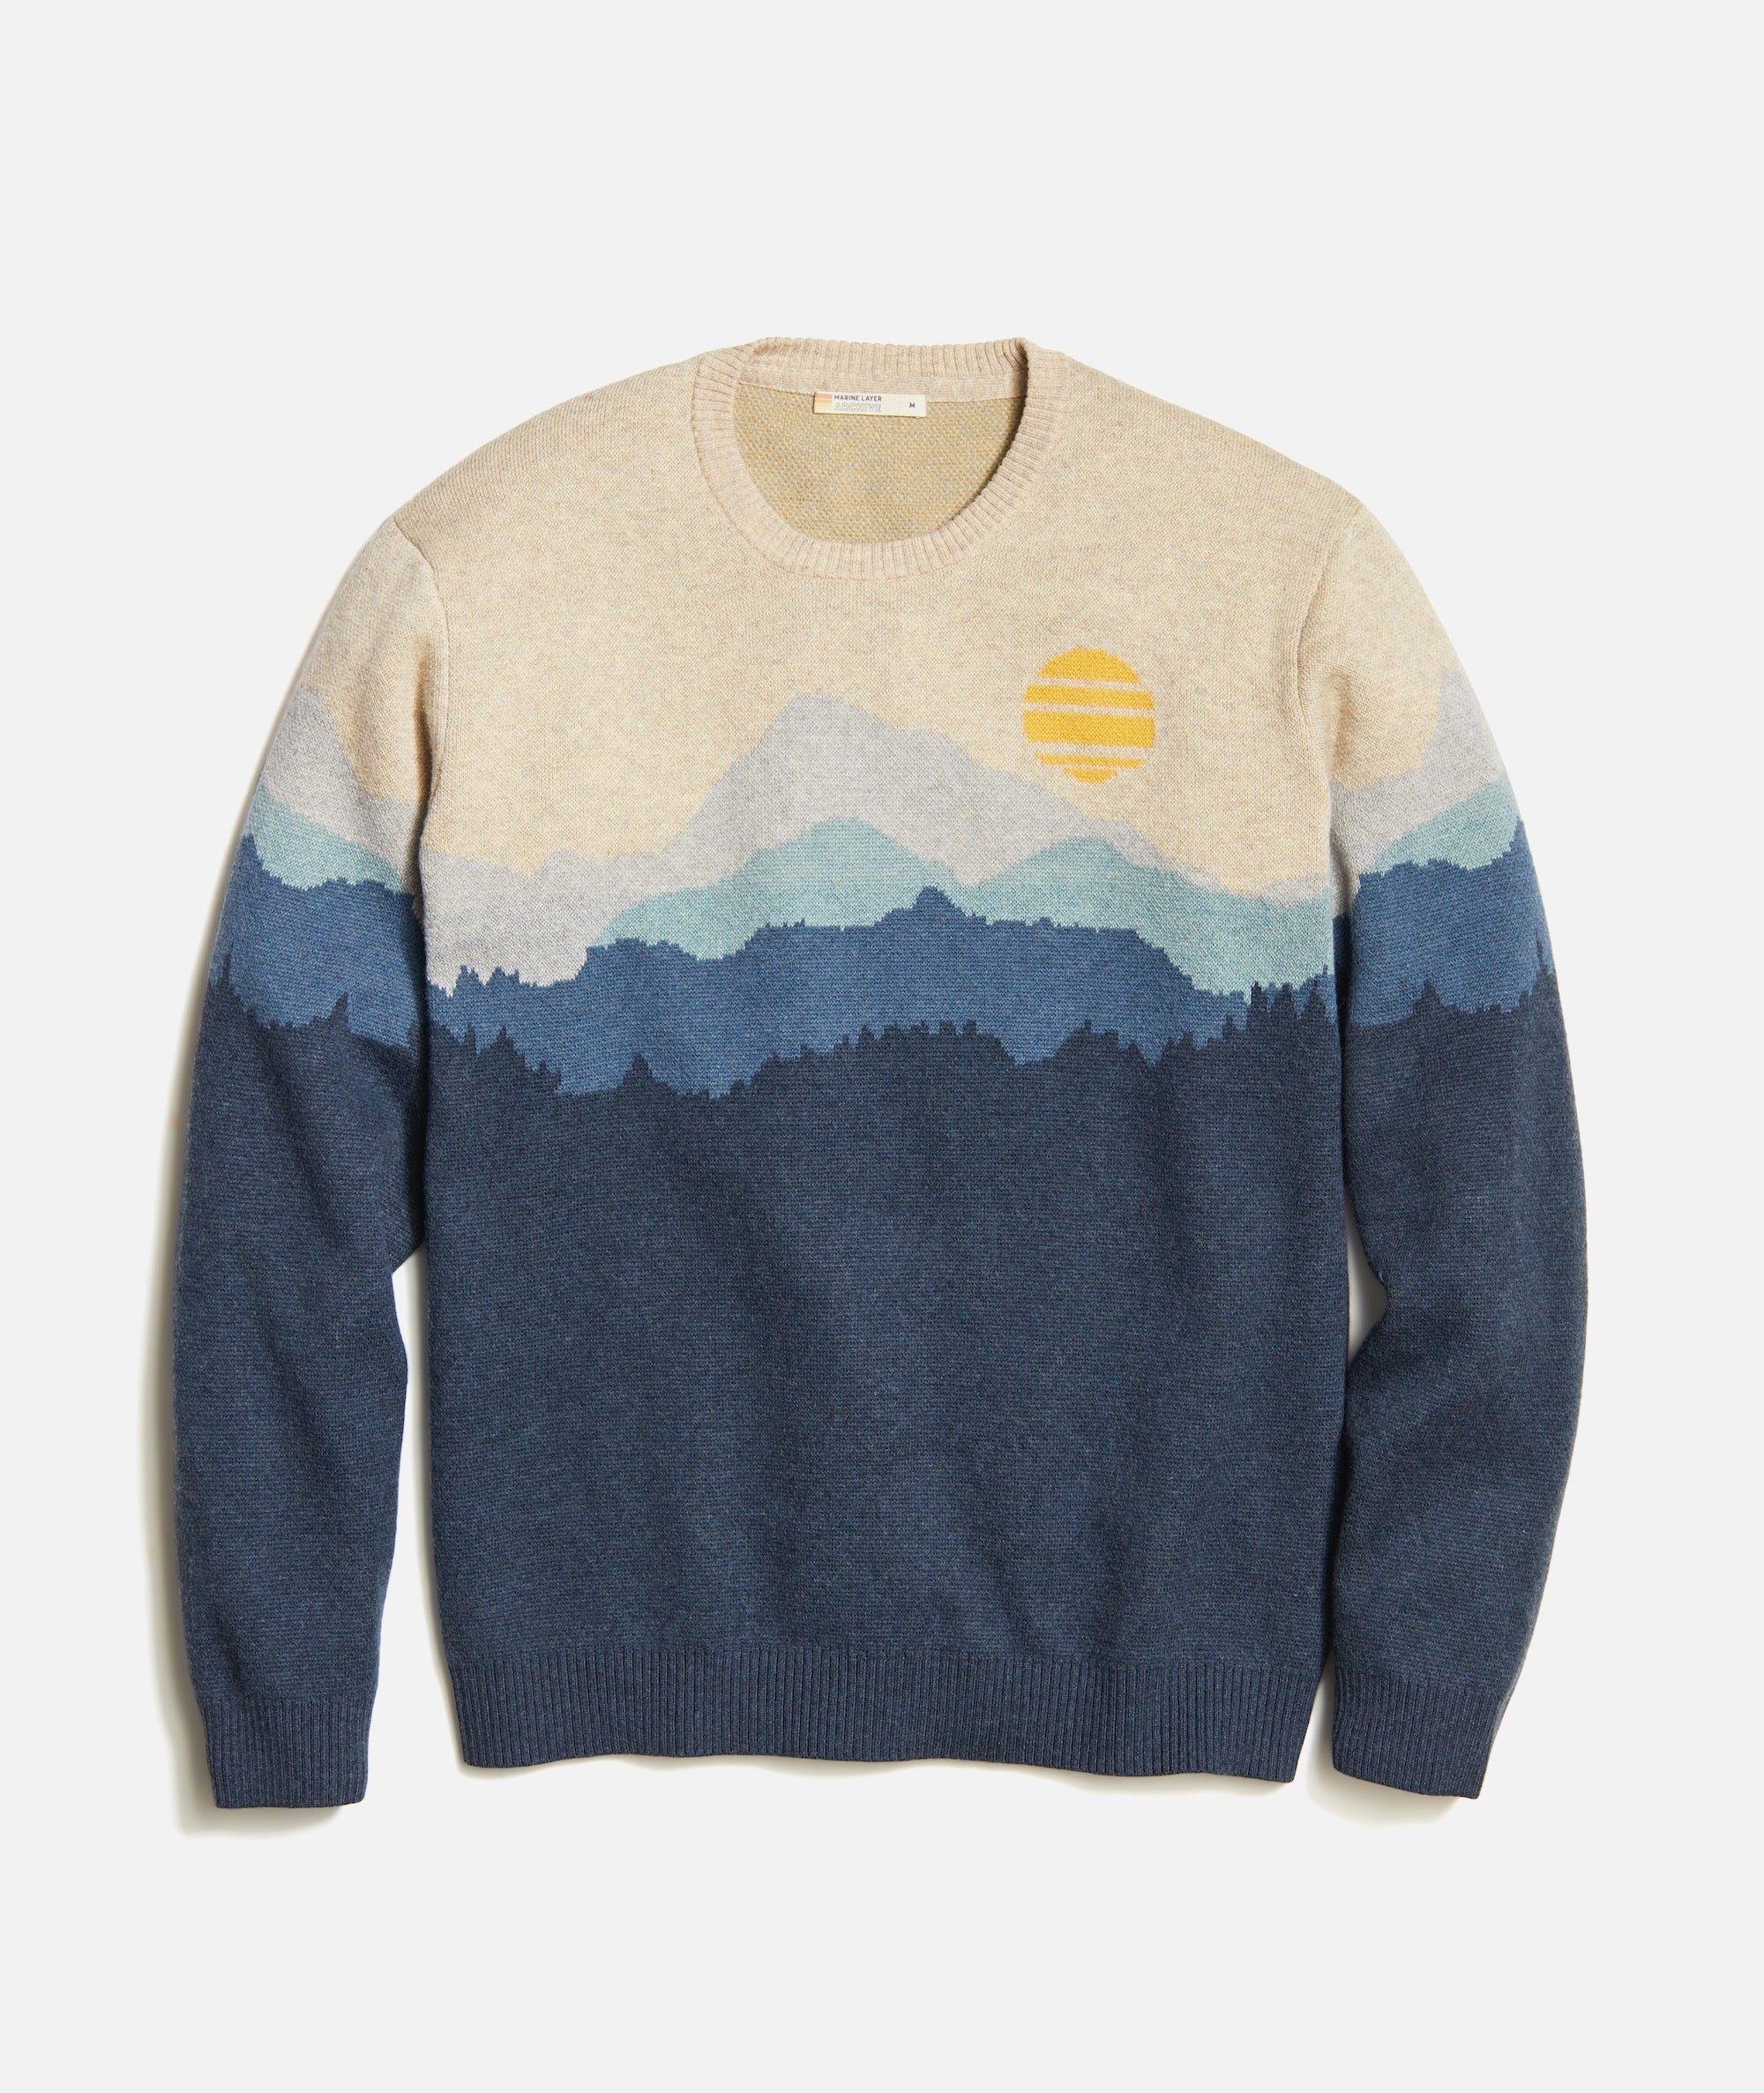 Calama Marine – Layer Archive Sweater